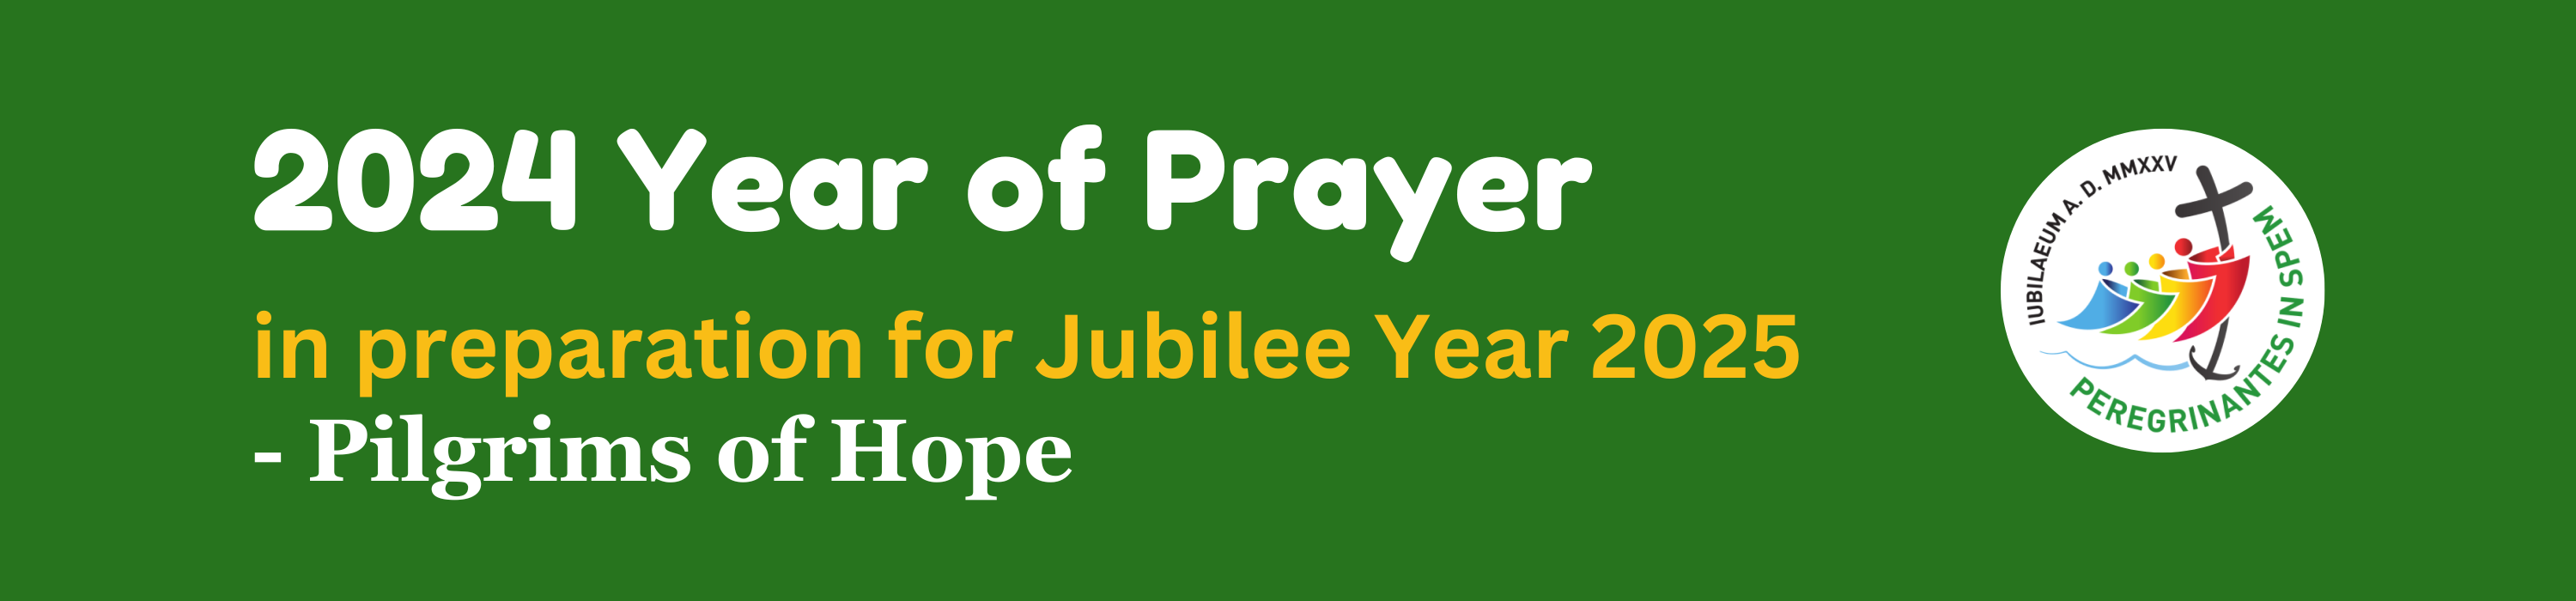 2024 Year of Prayer, in preparation for Jubilee Year 2025 - - Pilgrims of Hope